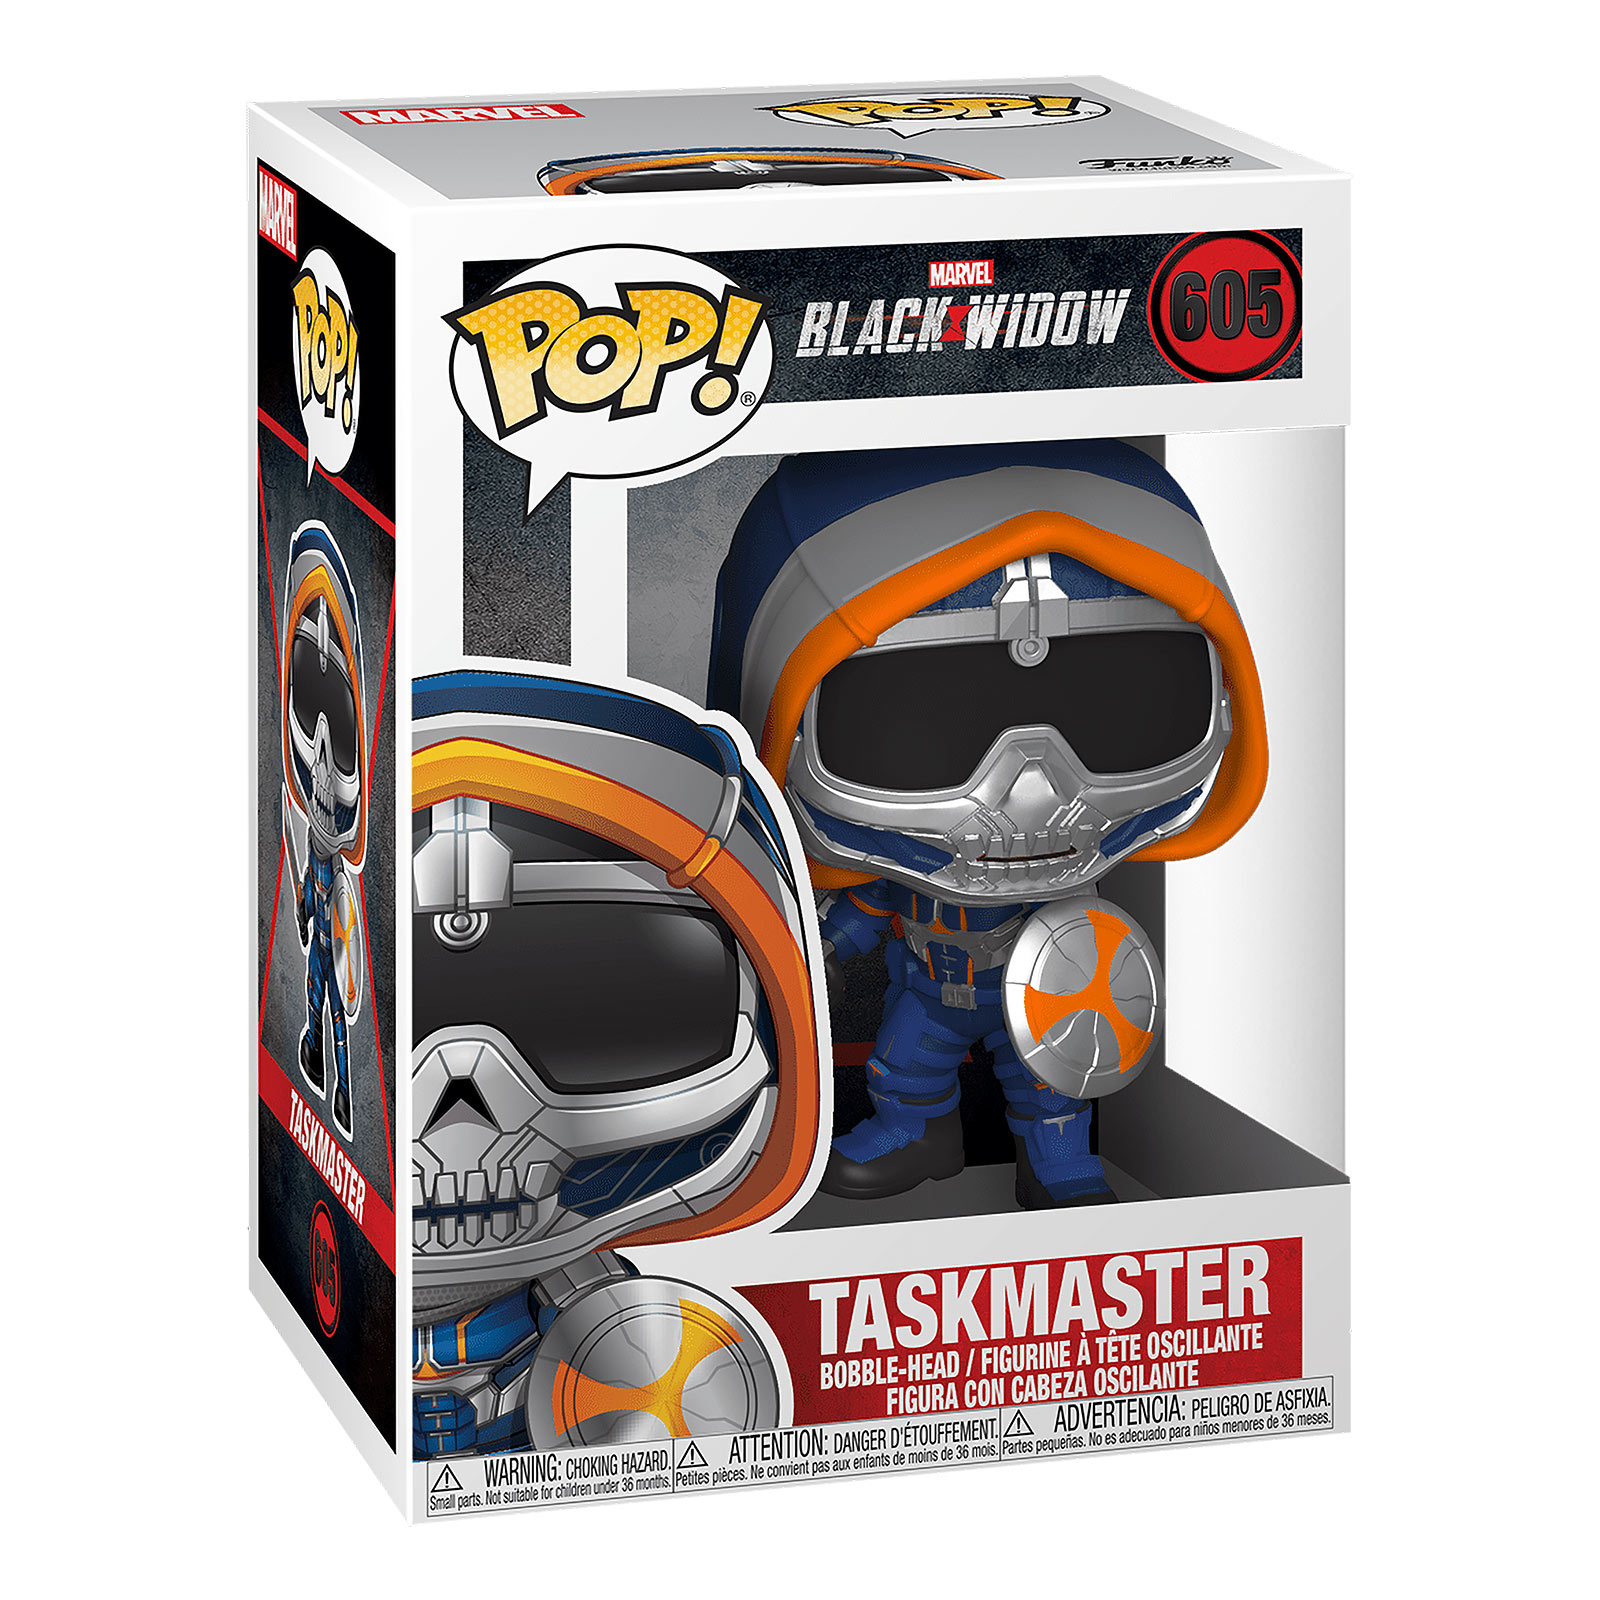 Black Widow - Taskmaster with shield Funko Pop bobblehead figure